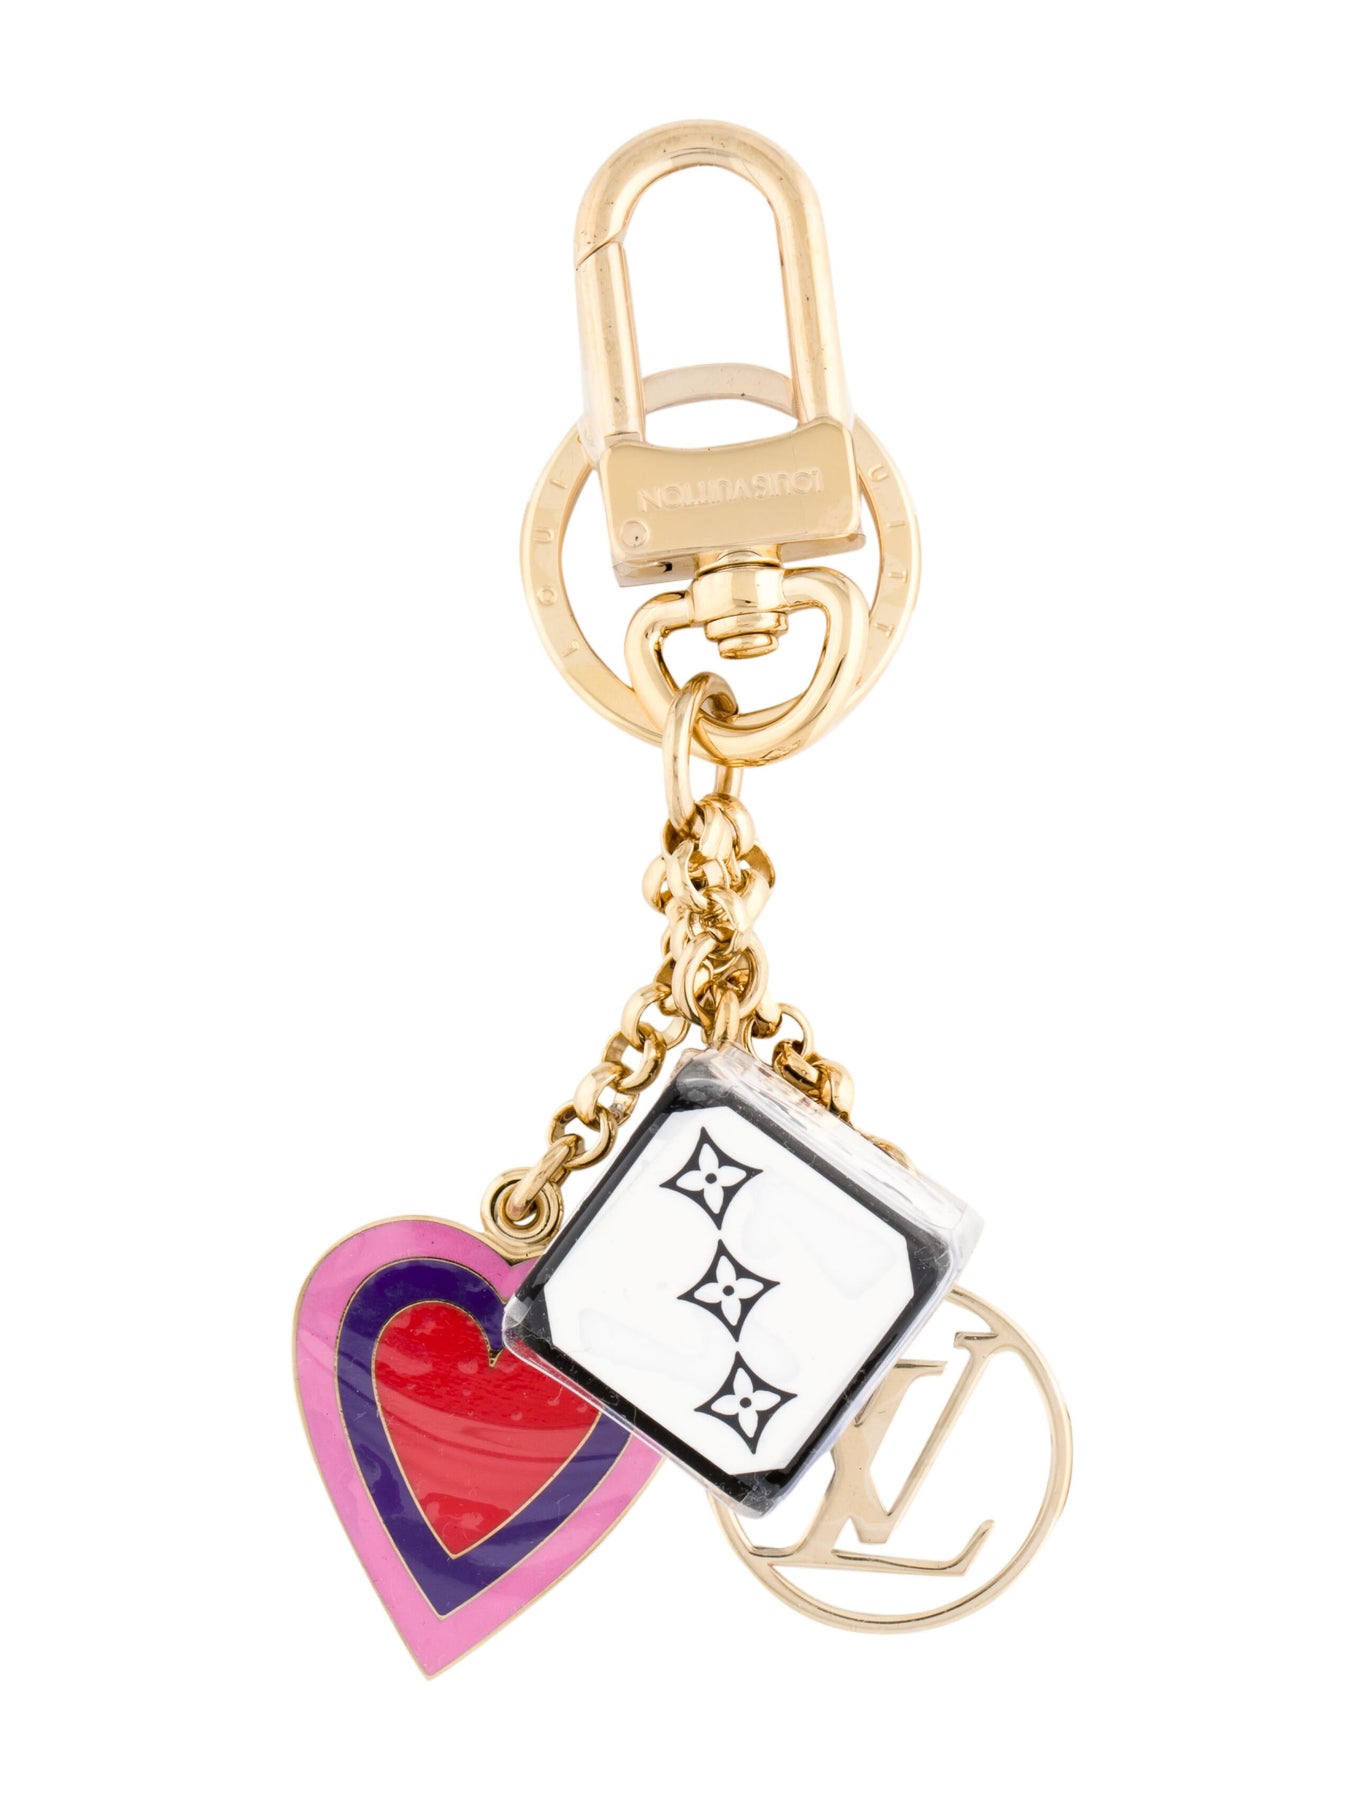 LOUIS VUITTON Bag charm Key chain holder AUTH LV Padlock Heart